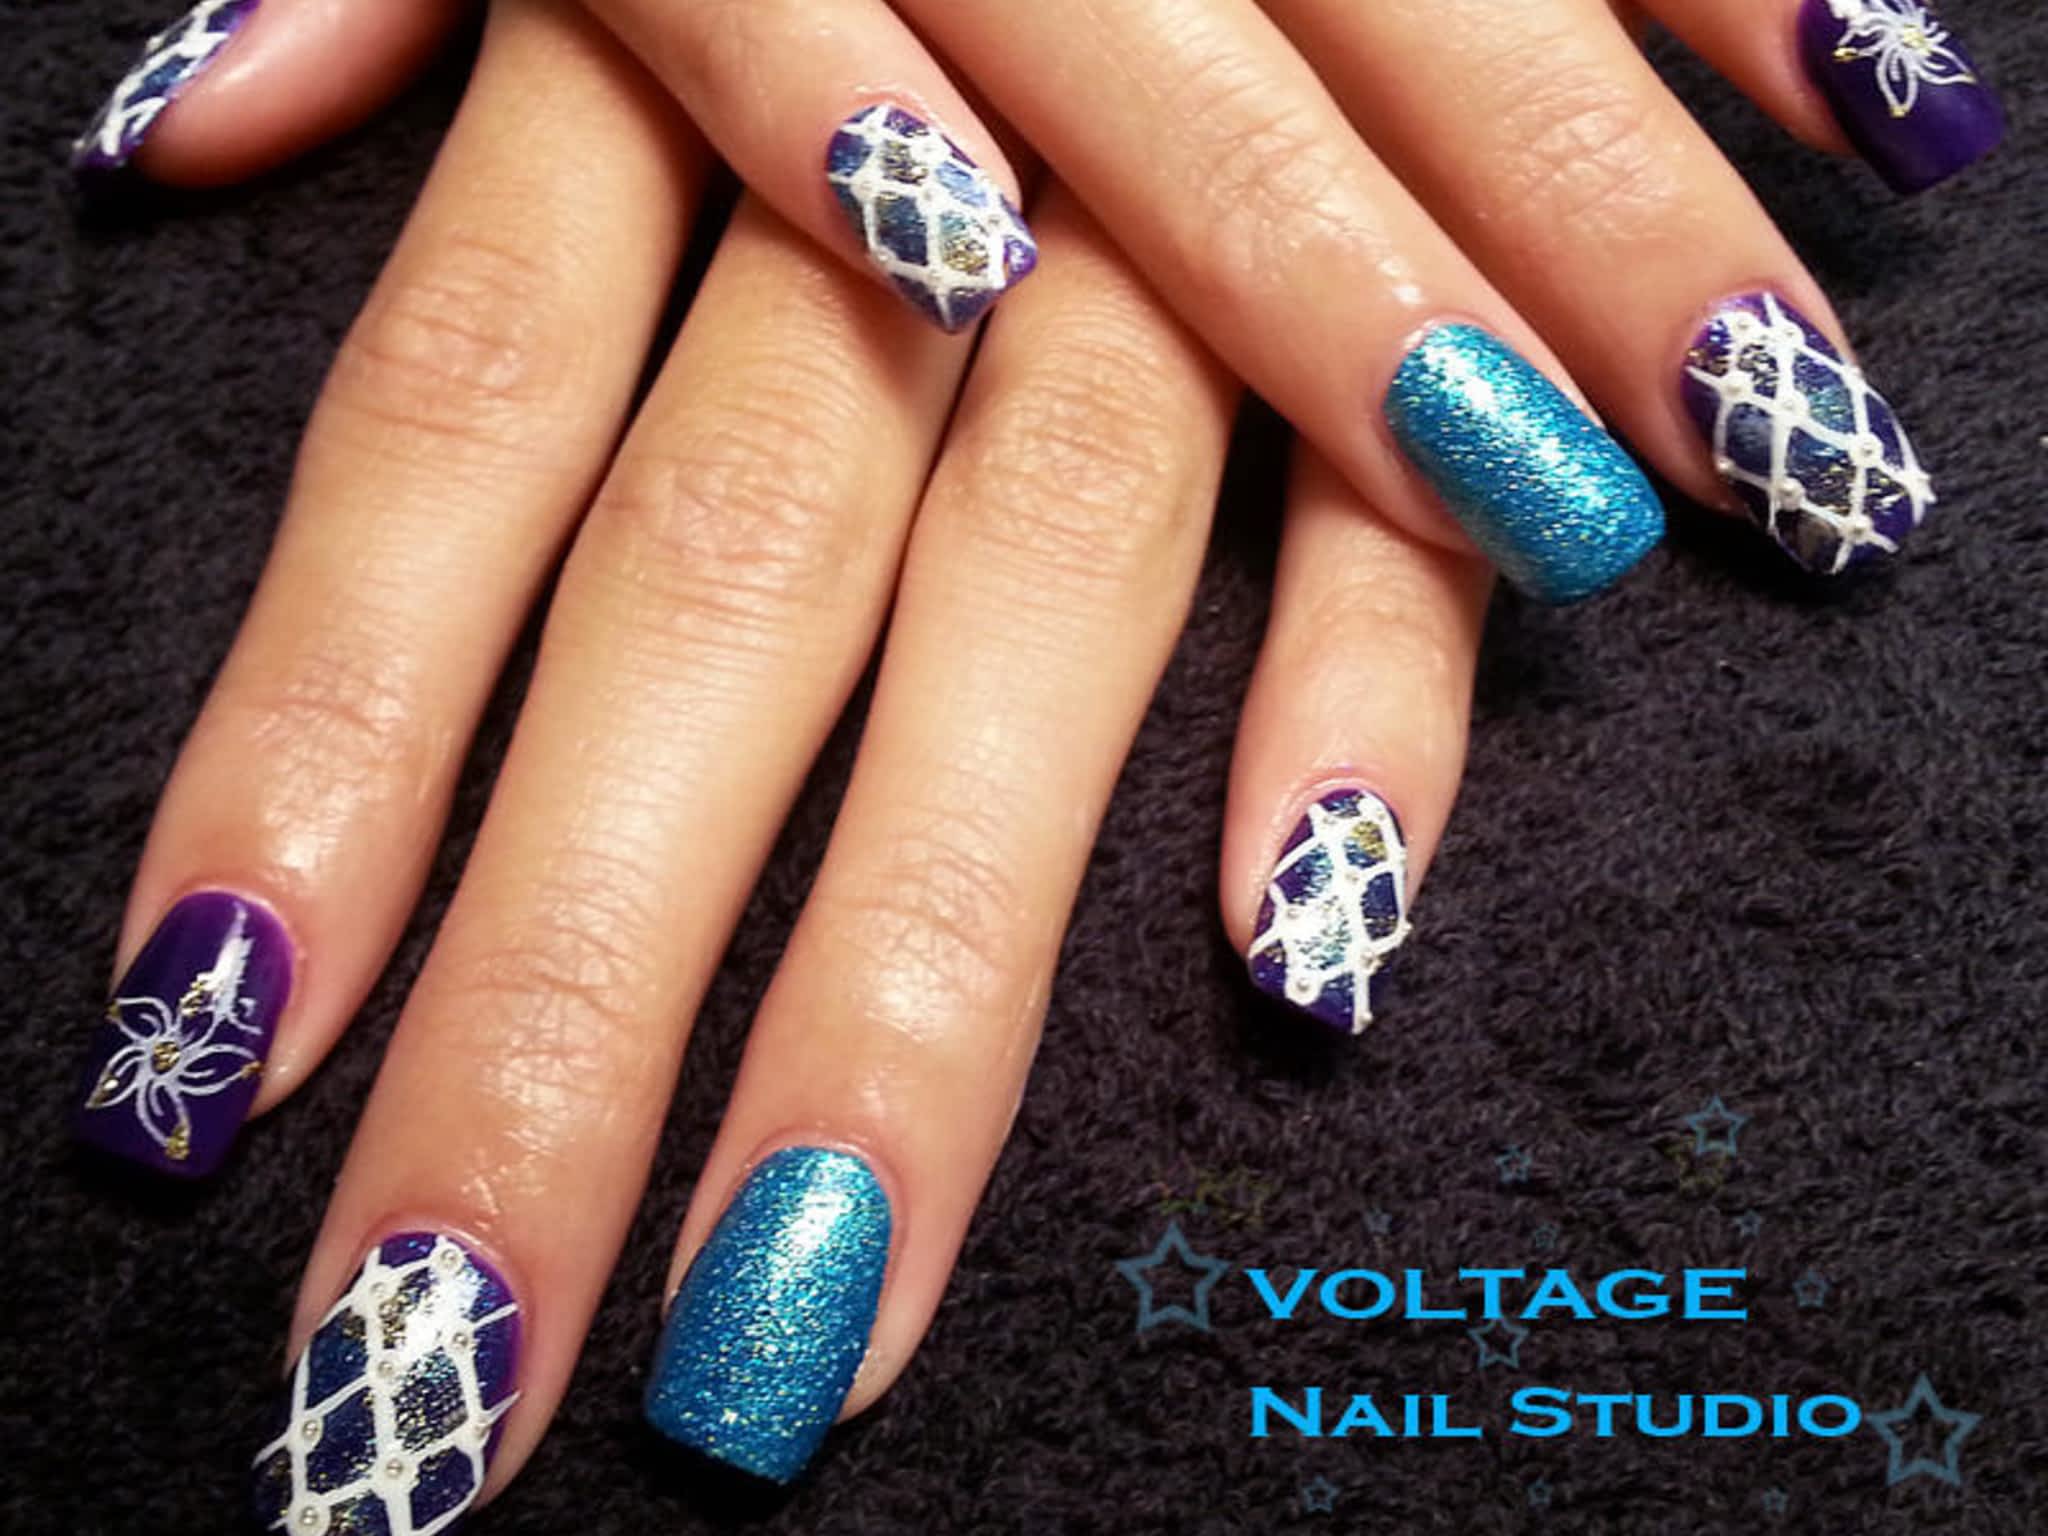 photo Voltage Nail Studio